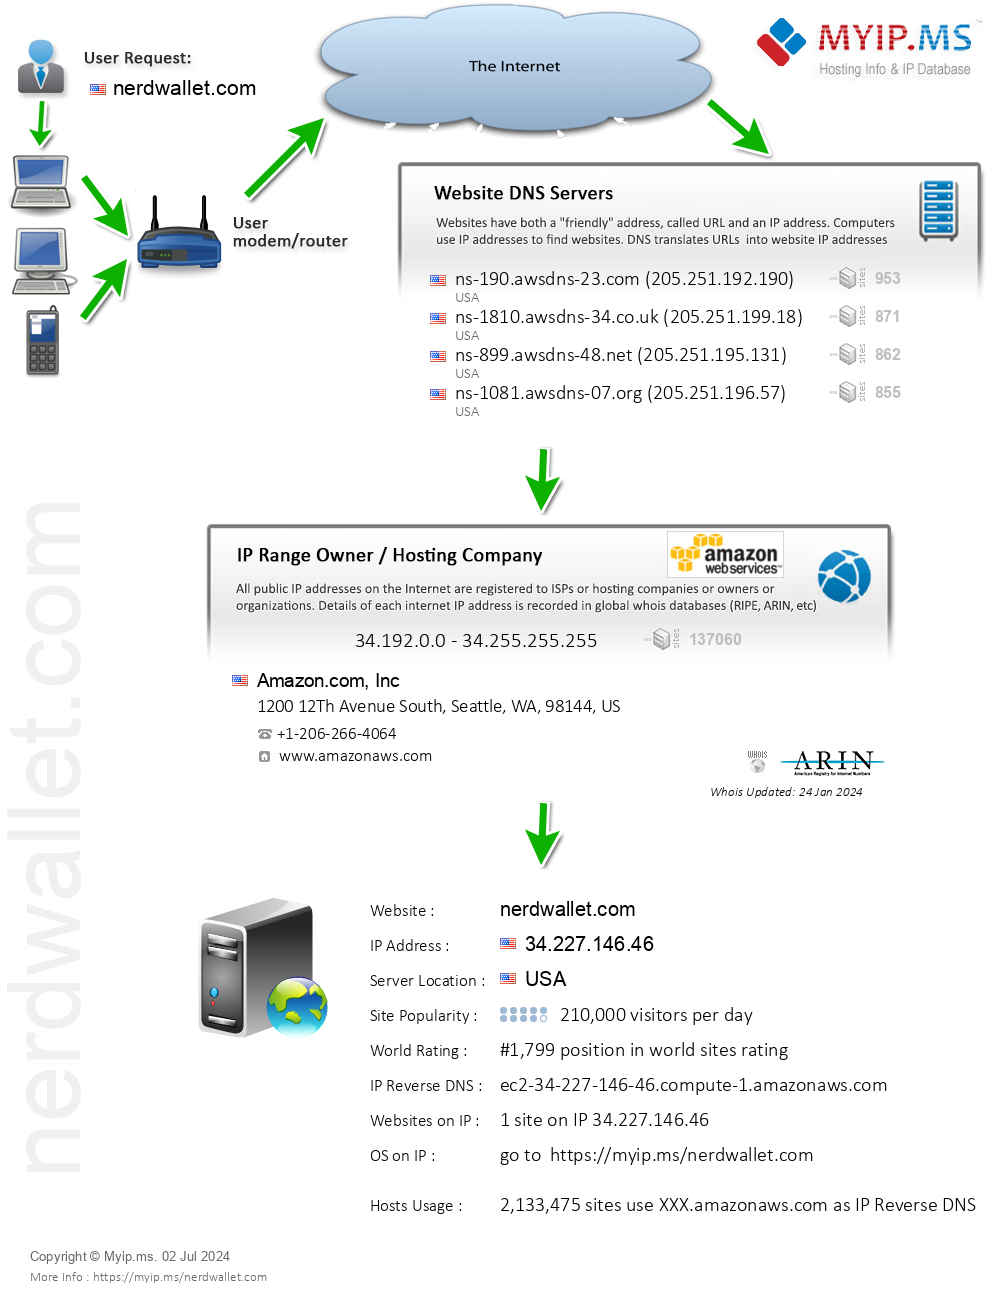 Nerdwallet.com - Website Hosting Visual IP Diagram